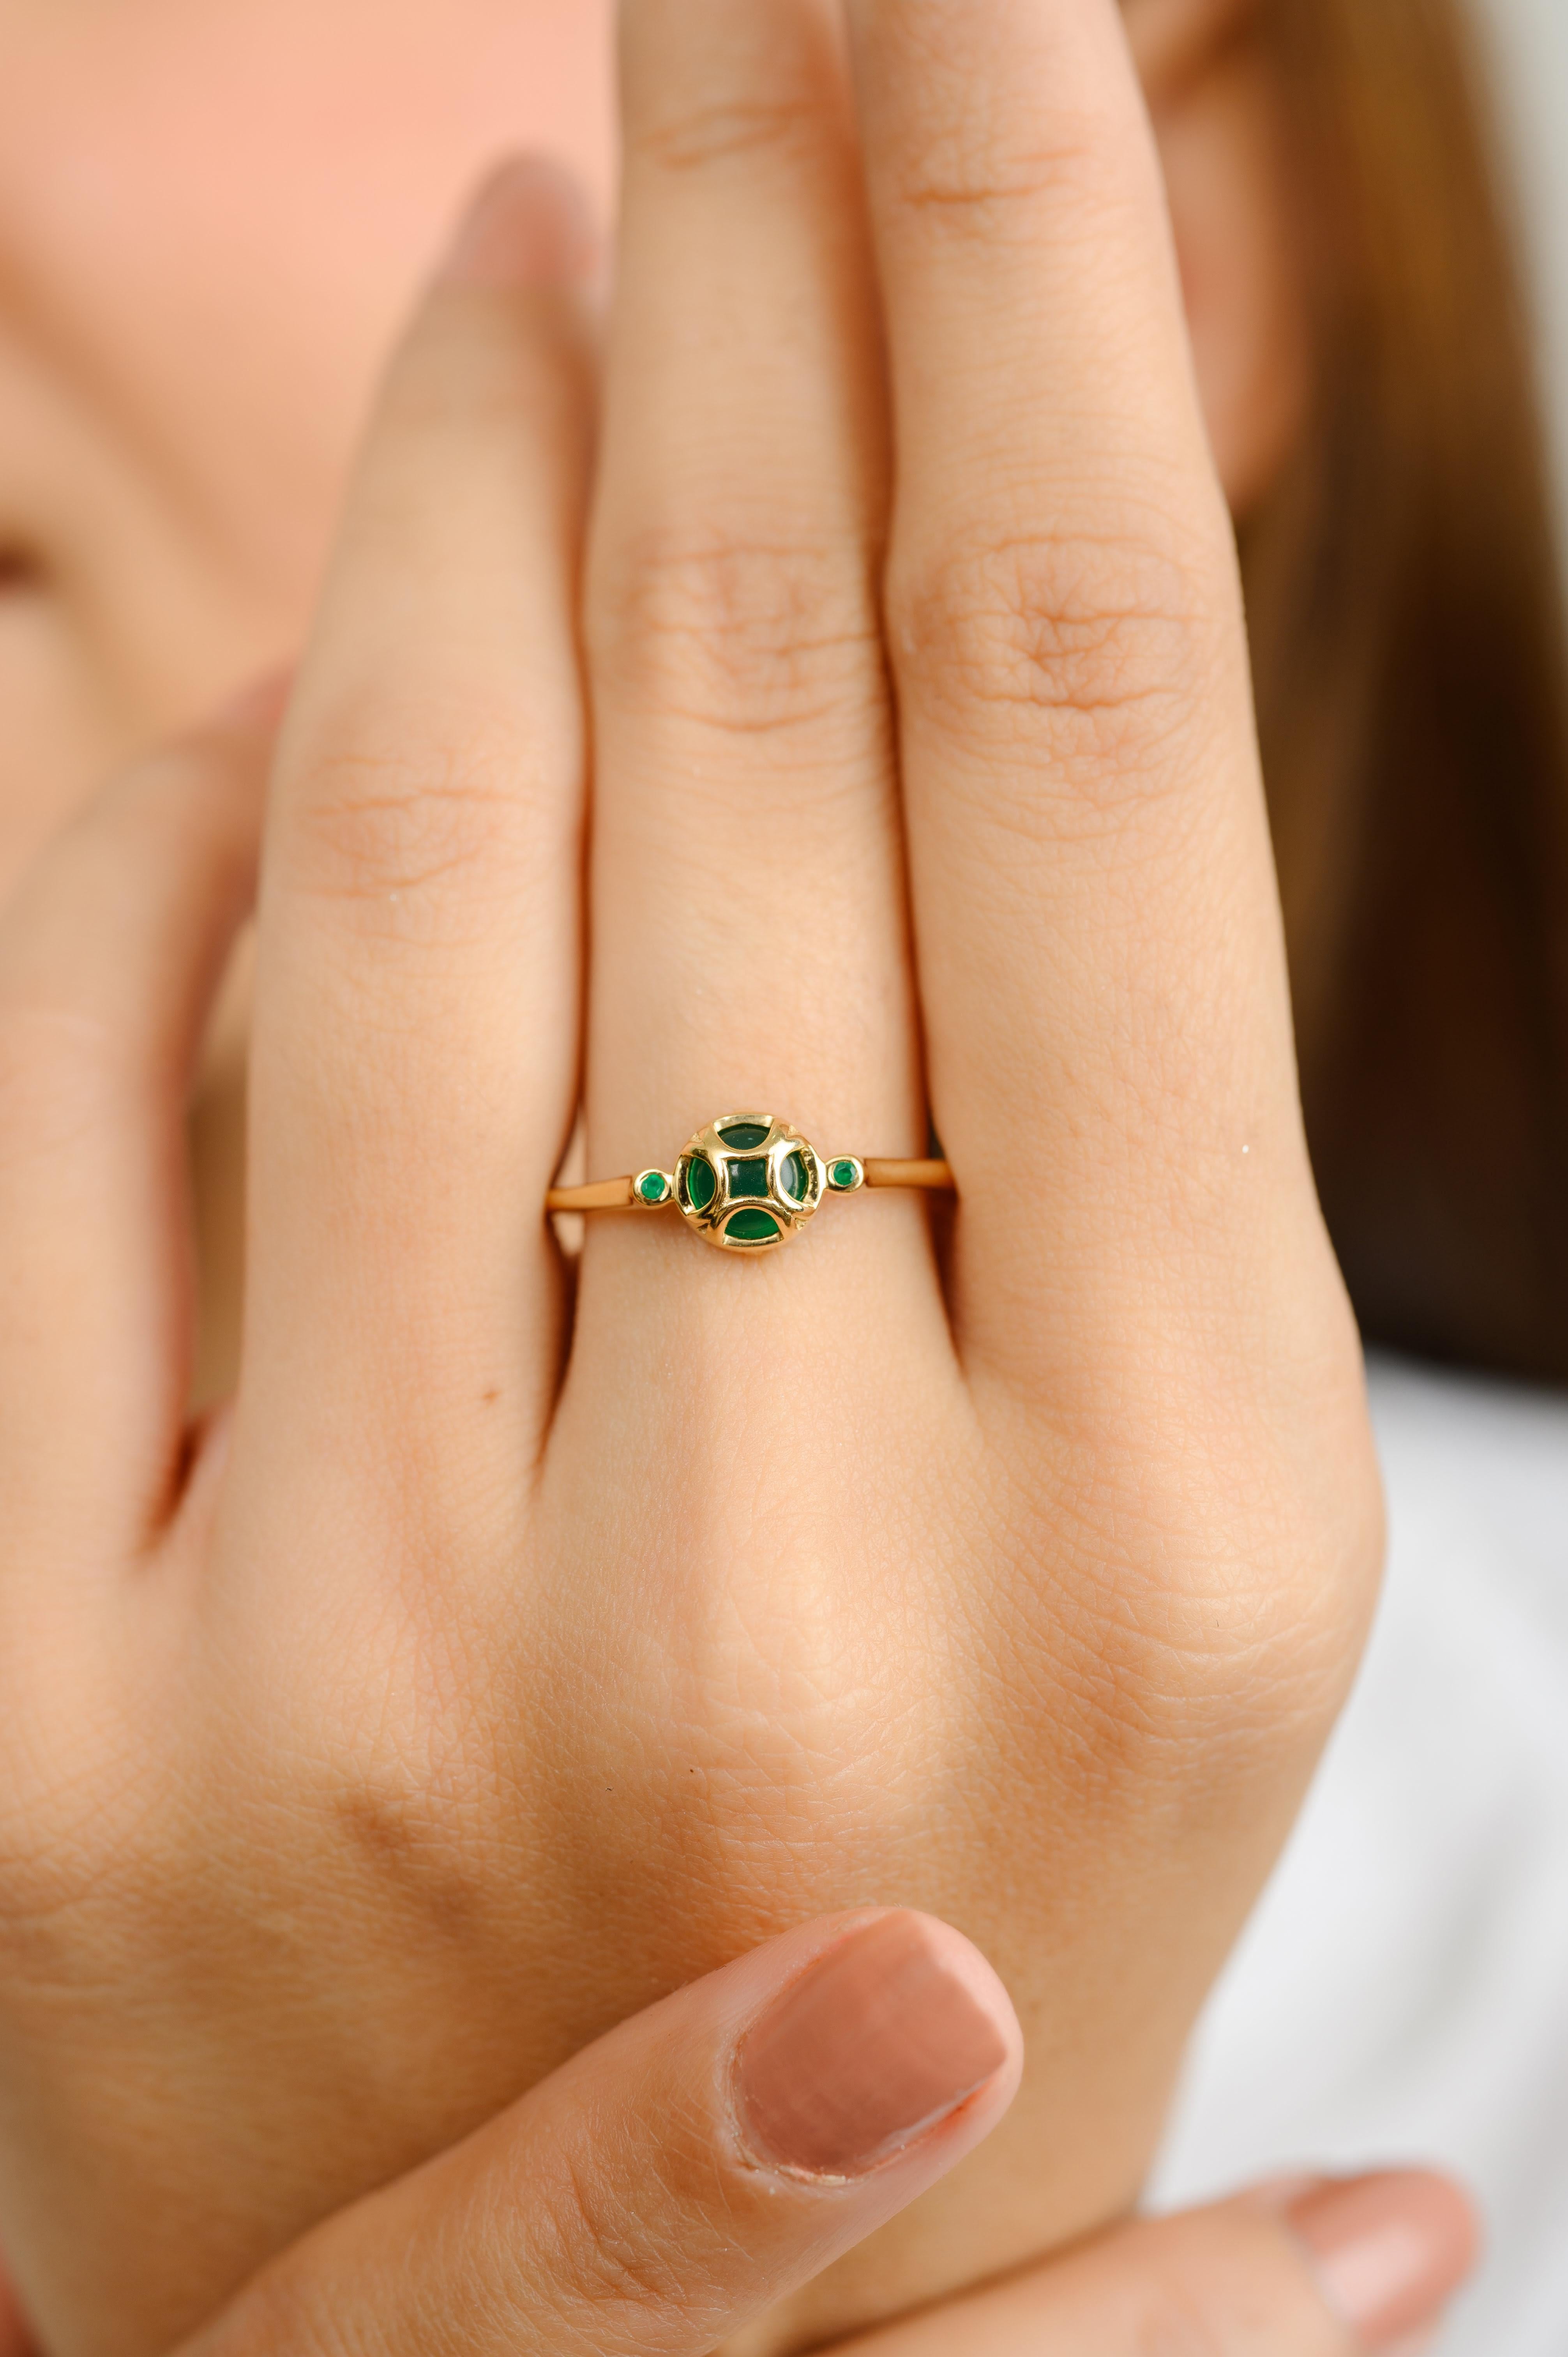 En vente :  The Moderns & Greene & Greene Greene & Greene Onyx Minimalist Everyday Ring for Her 2